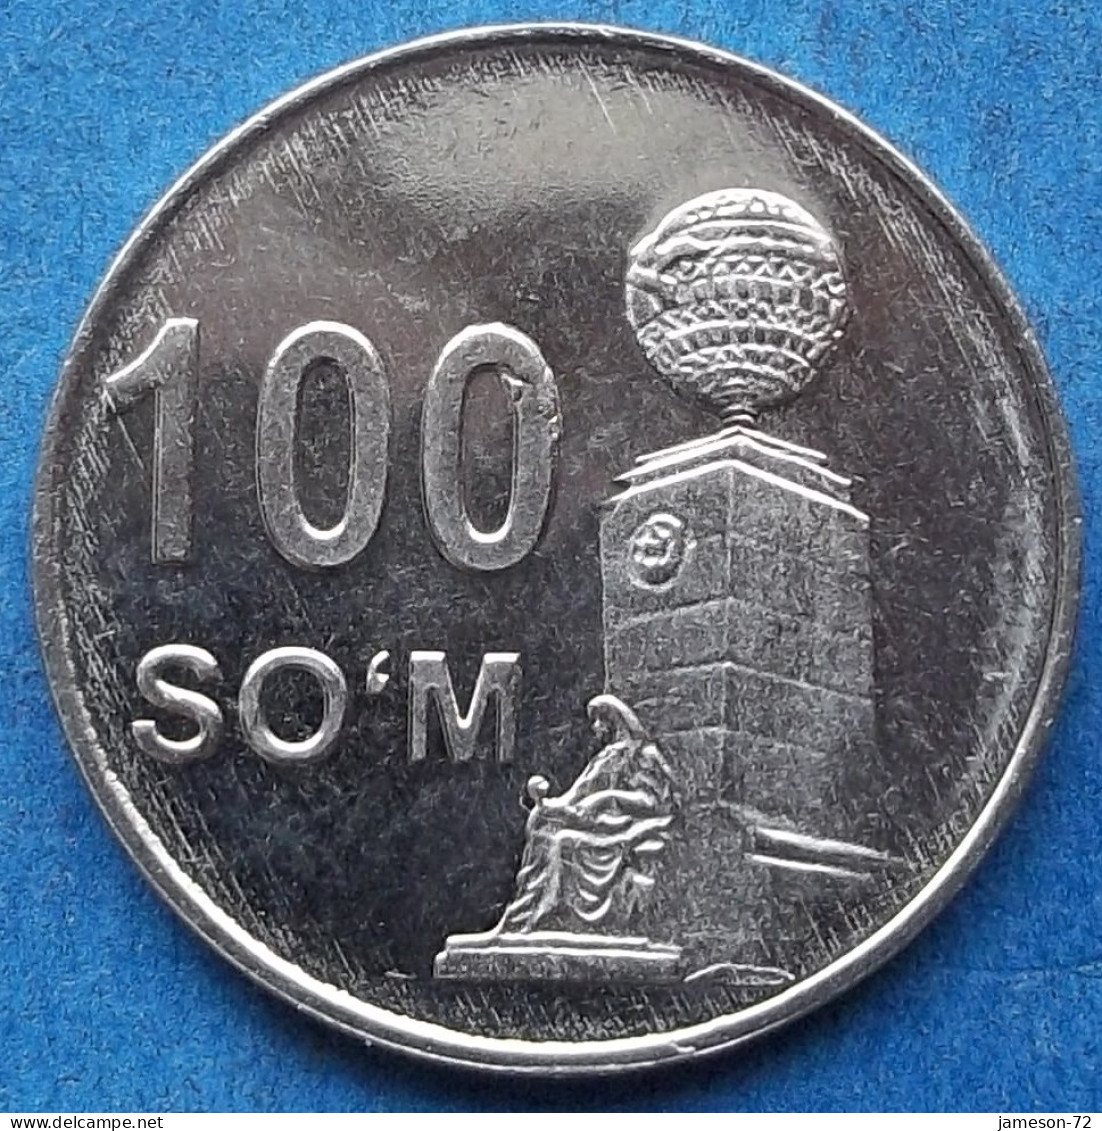 UZBEKISTAN - 100 Som 2018 "Independence And Goodness Monument" KM# 37 Independent Republic (1991) - Edelweiss Coins - Uzbekistan